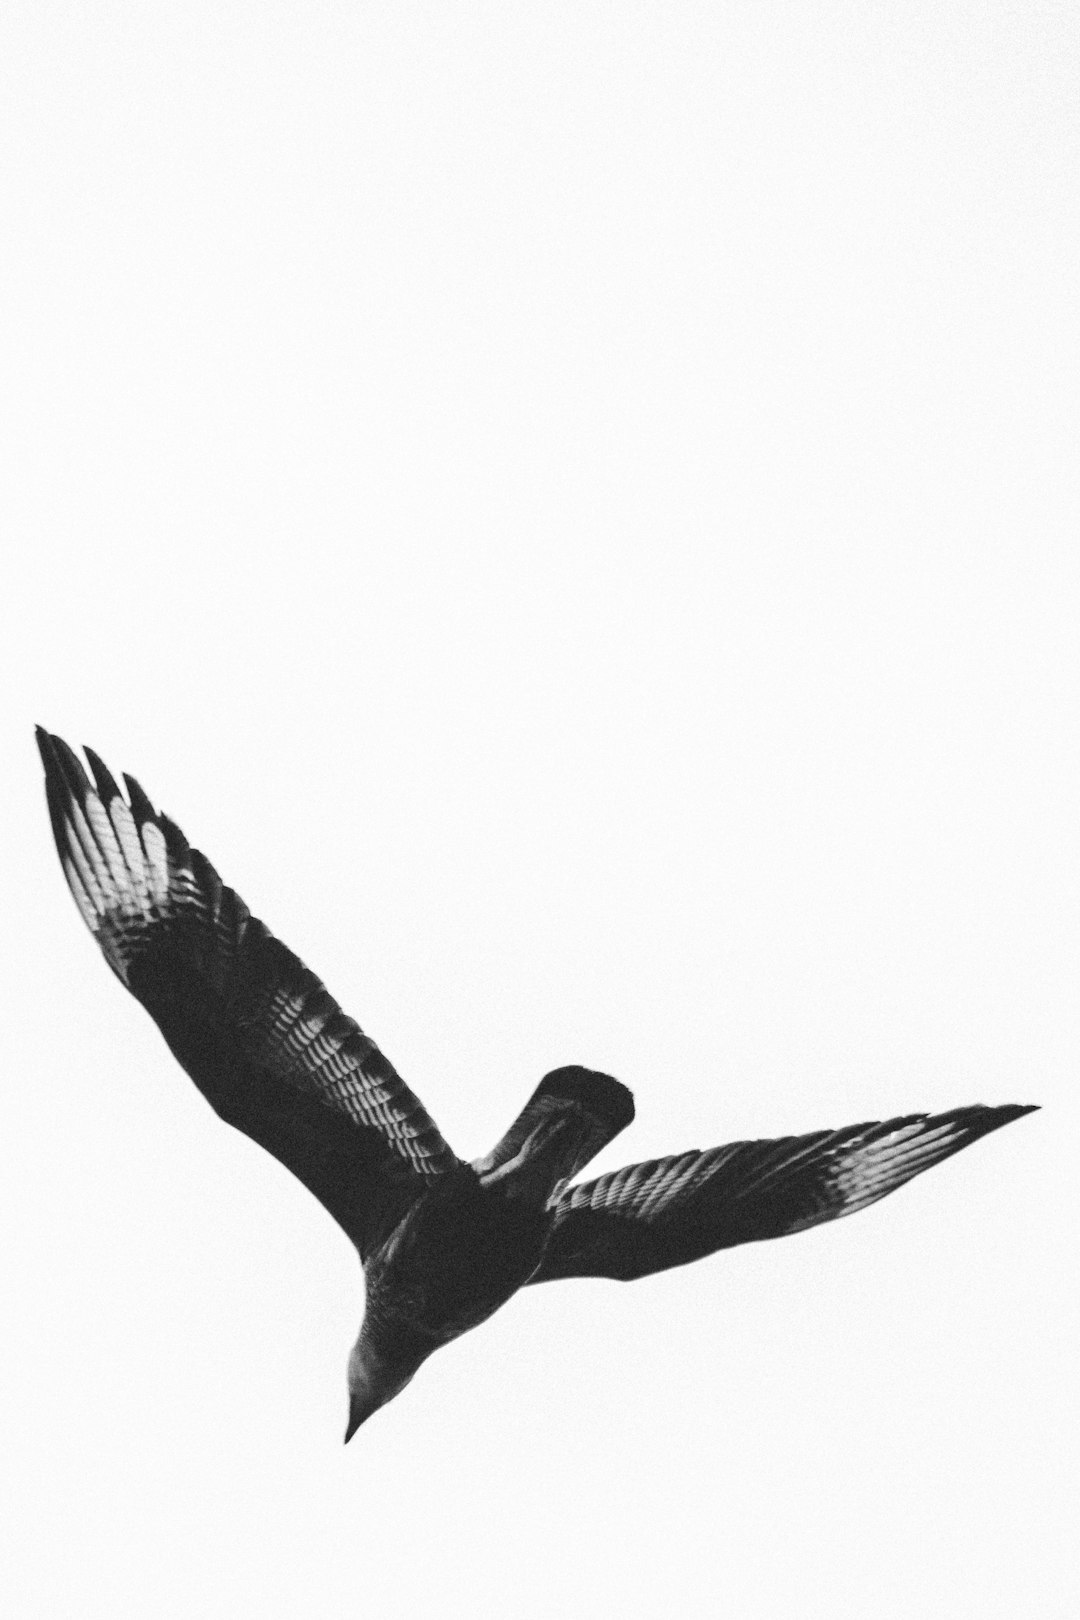 black and white bird flying